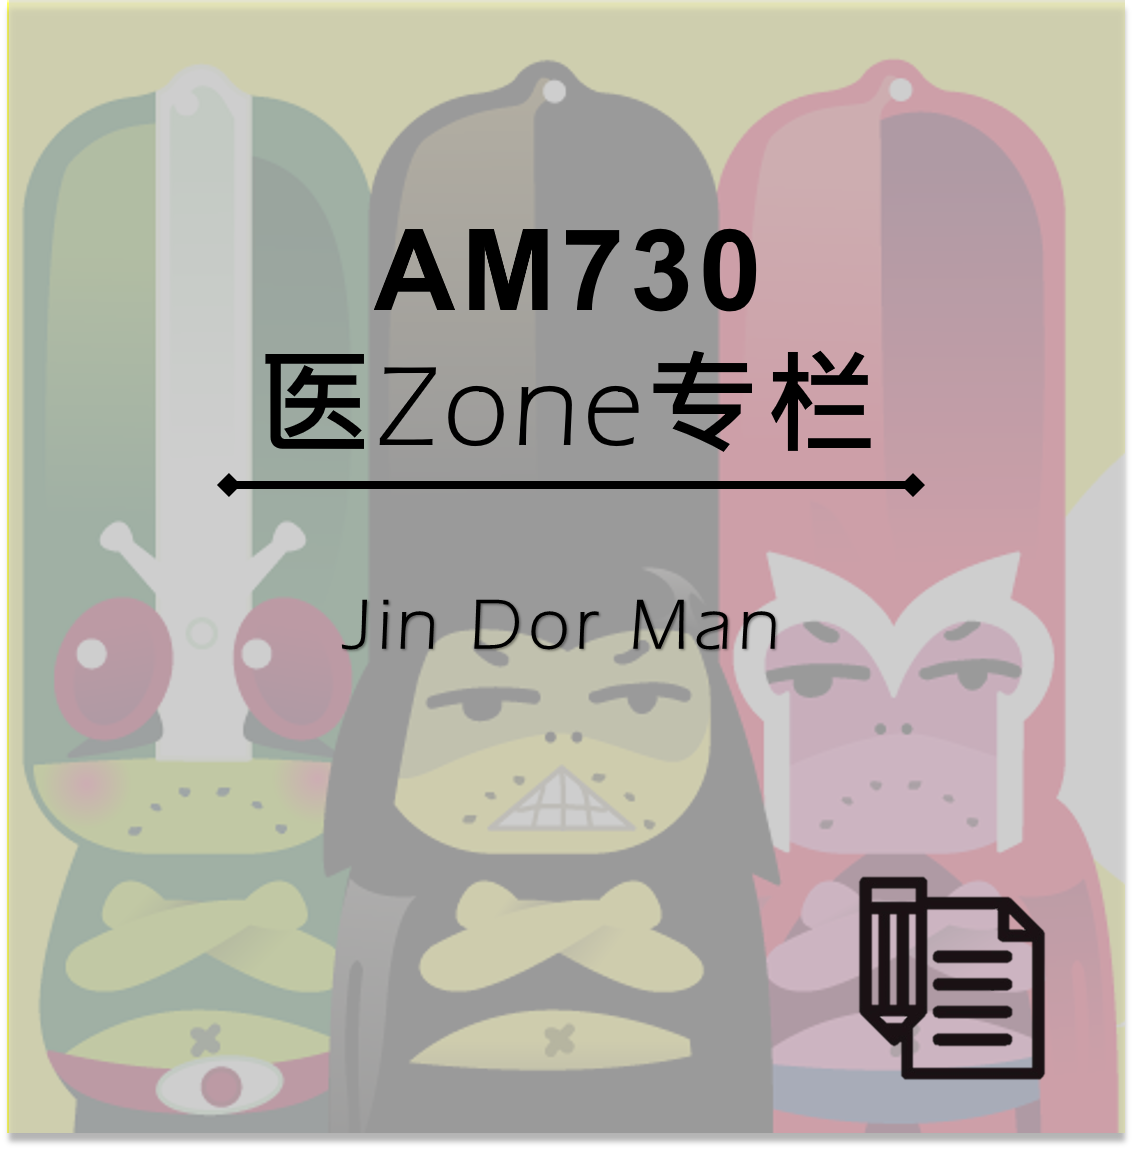 AM730 医Zone 专栏 - Jin Dor Man